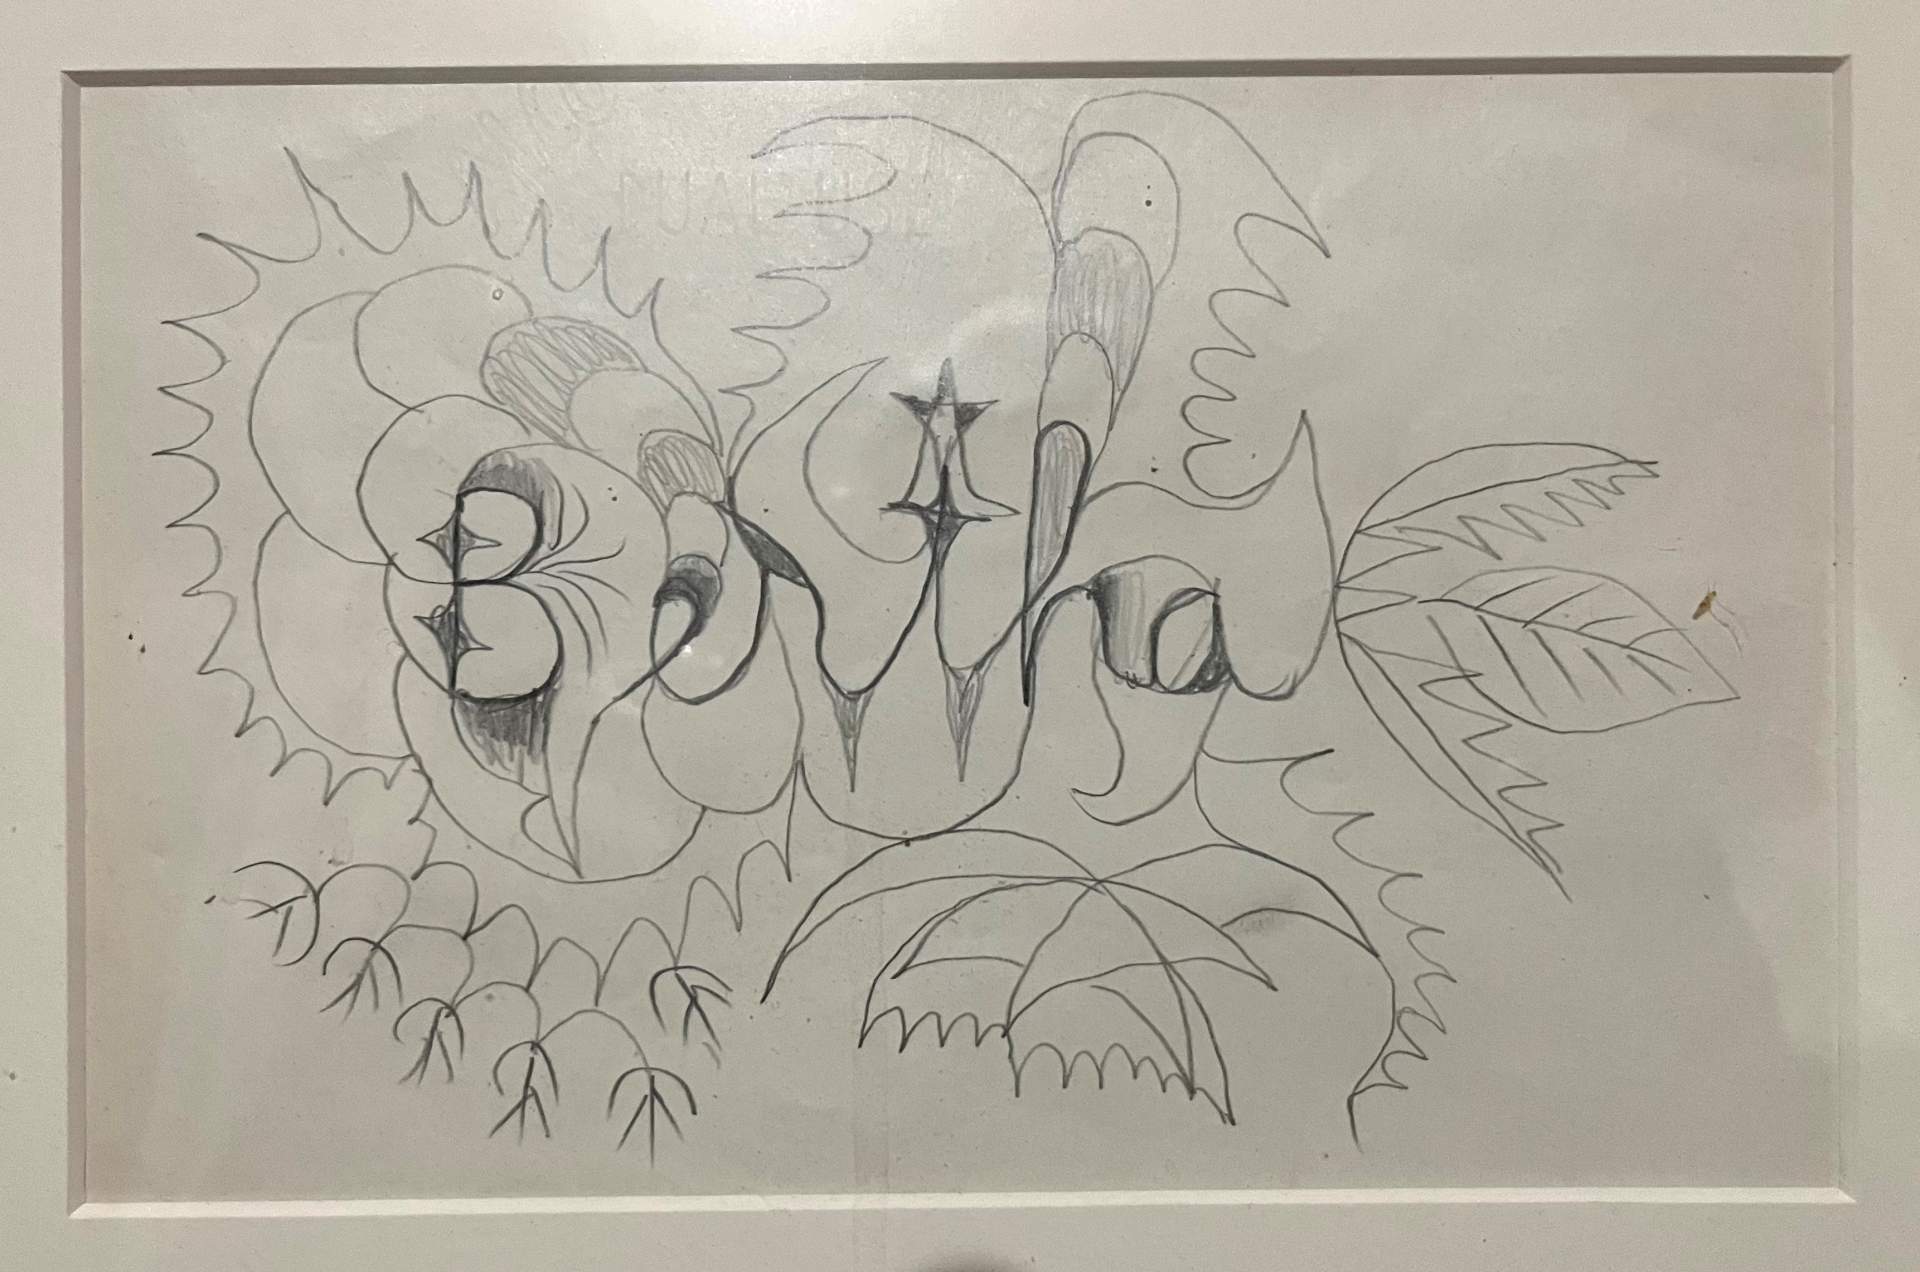 Bertha Doodle